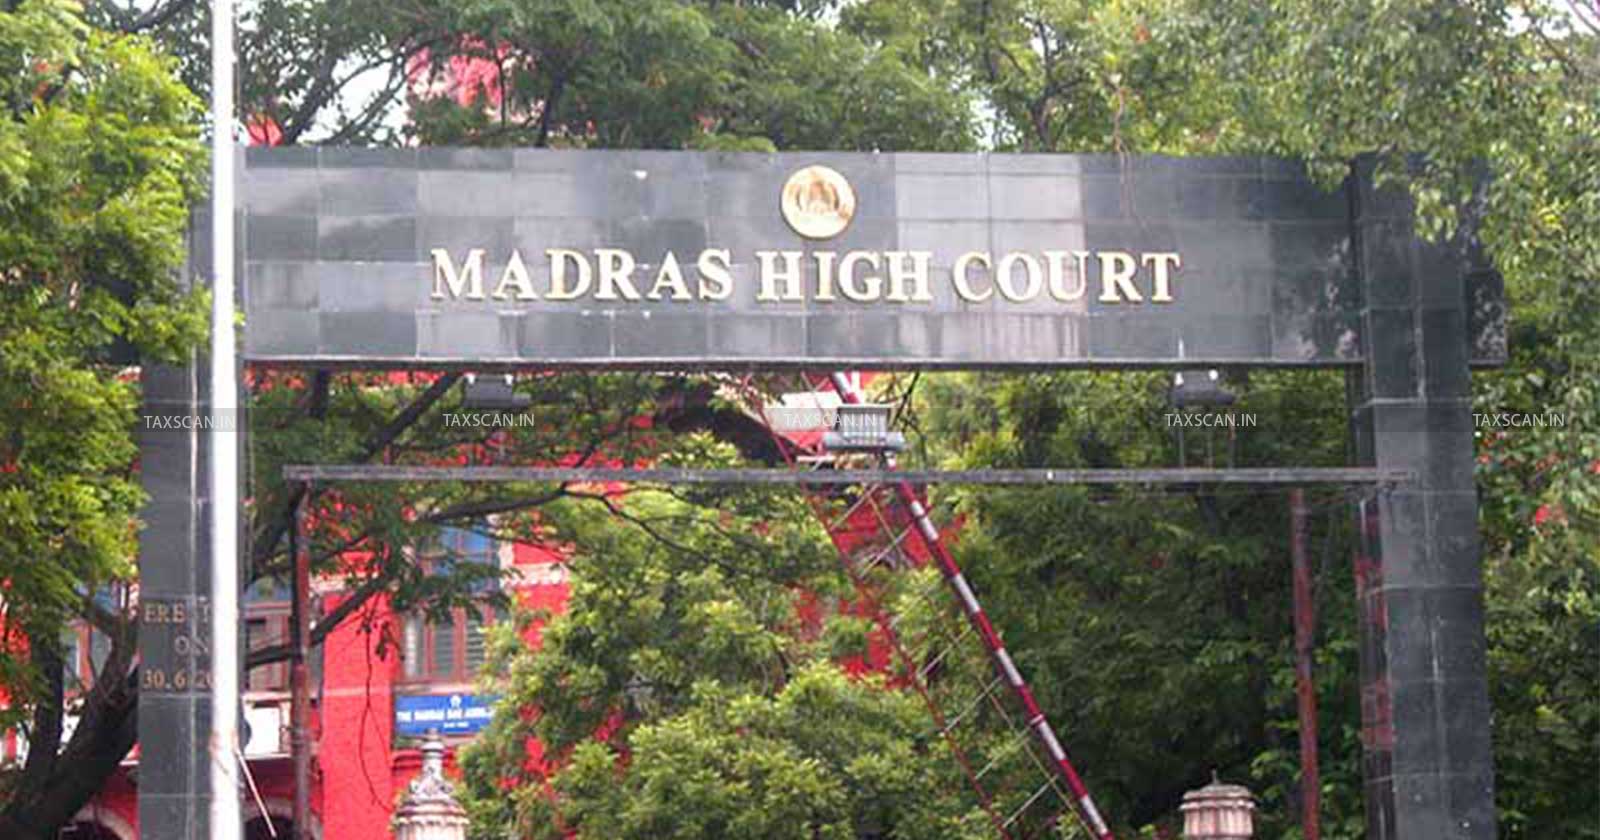 GST - Madras High Court - Audit Report - Section 65 CGST Act - GST audit report - taxscan